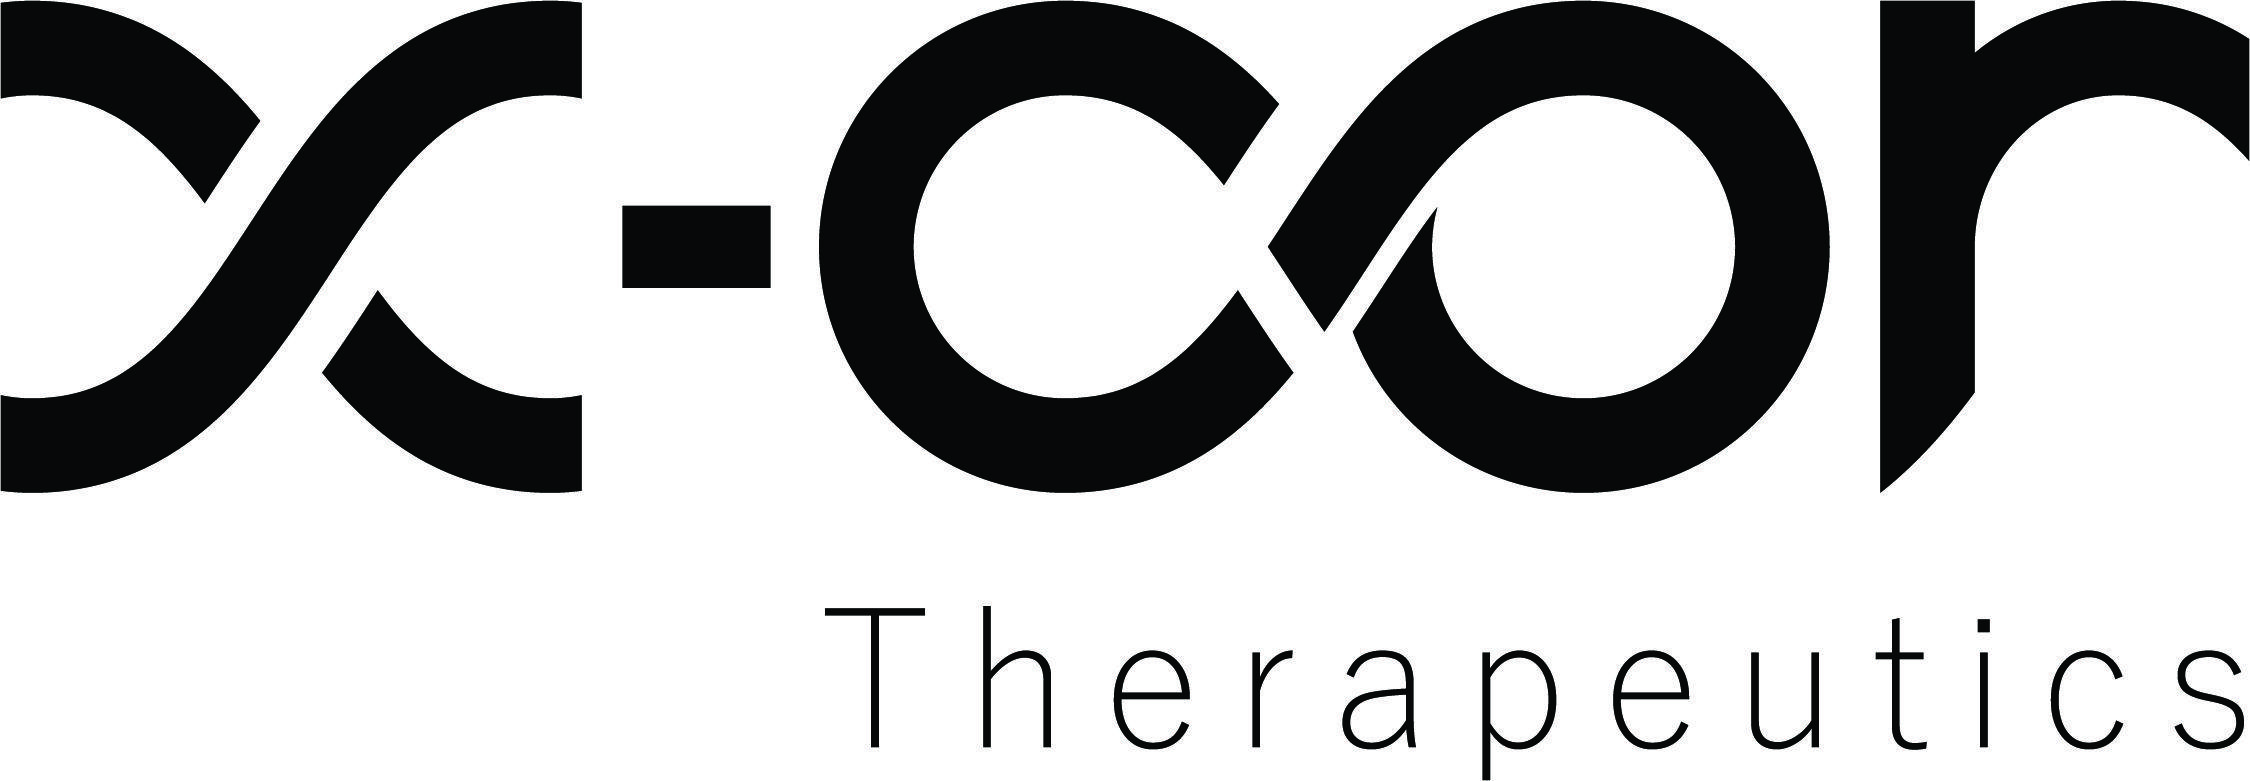 Cor Logo - X-Cor Therapeutics - Harvard innovation labs